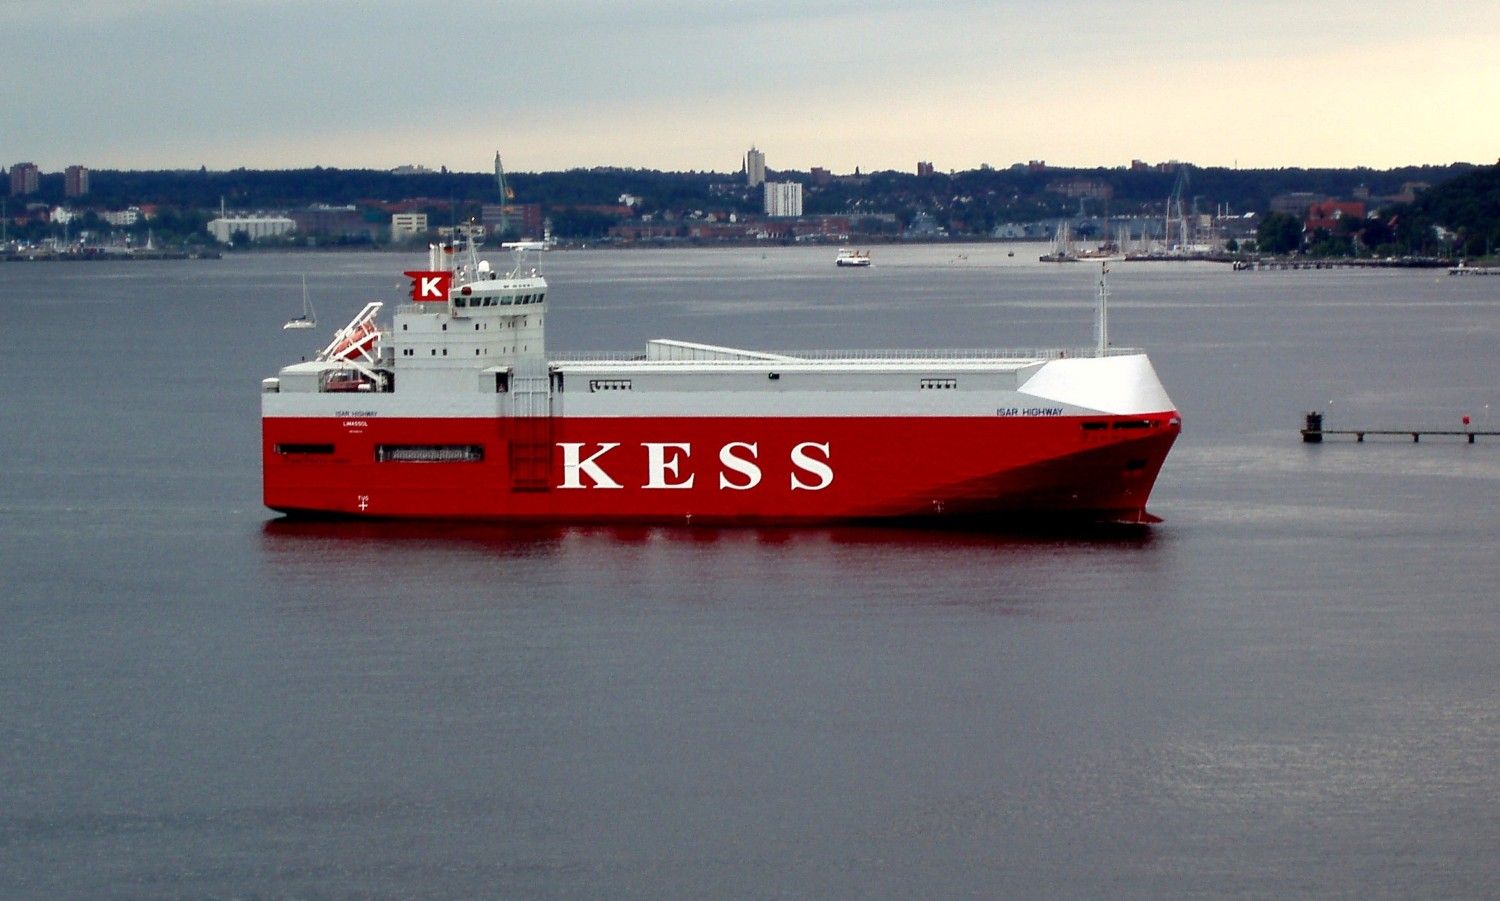 Car carrier de la naviera KESS operada por K-Line